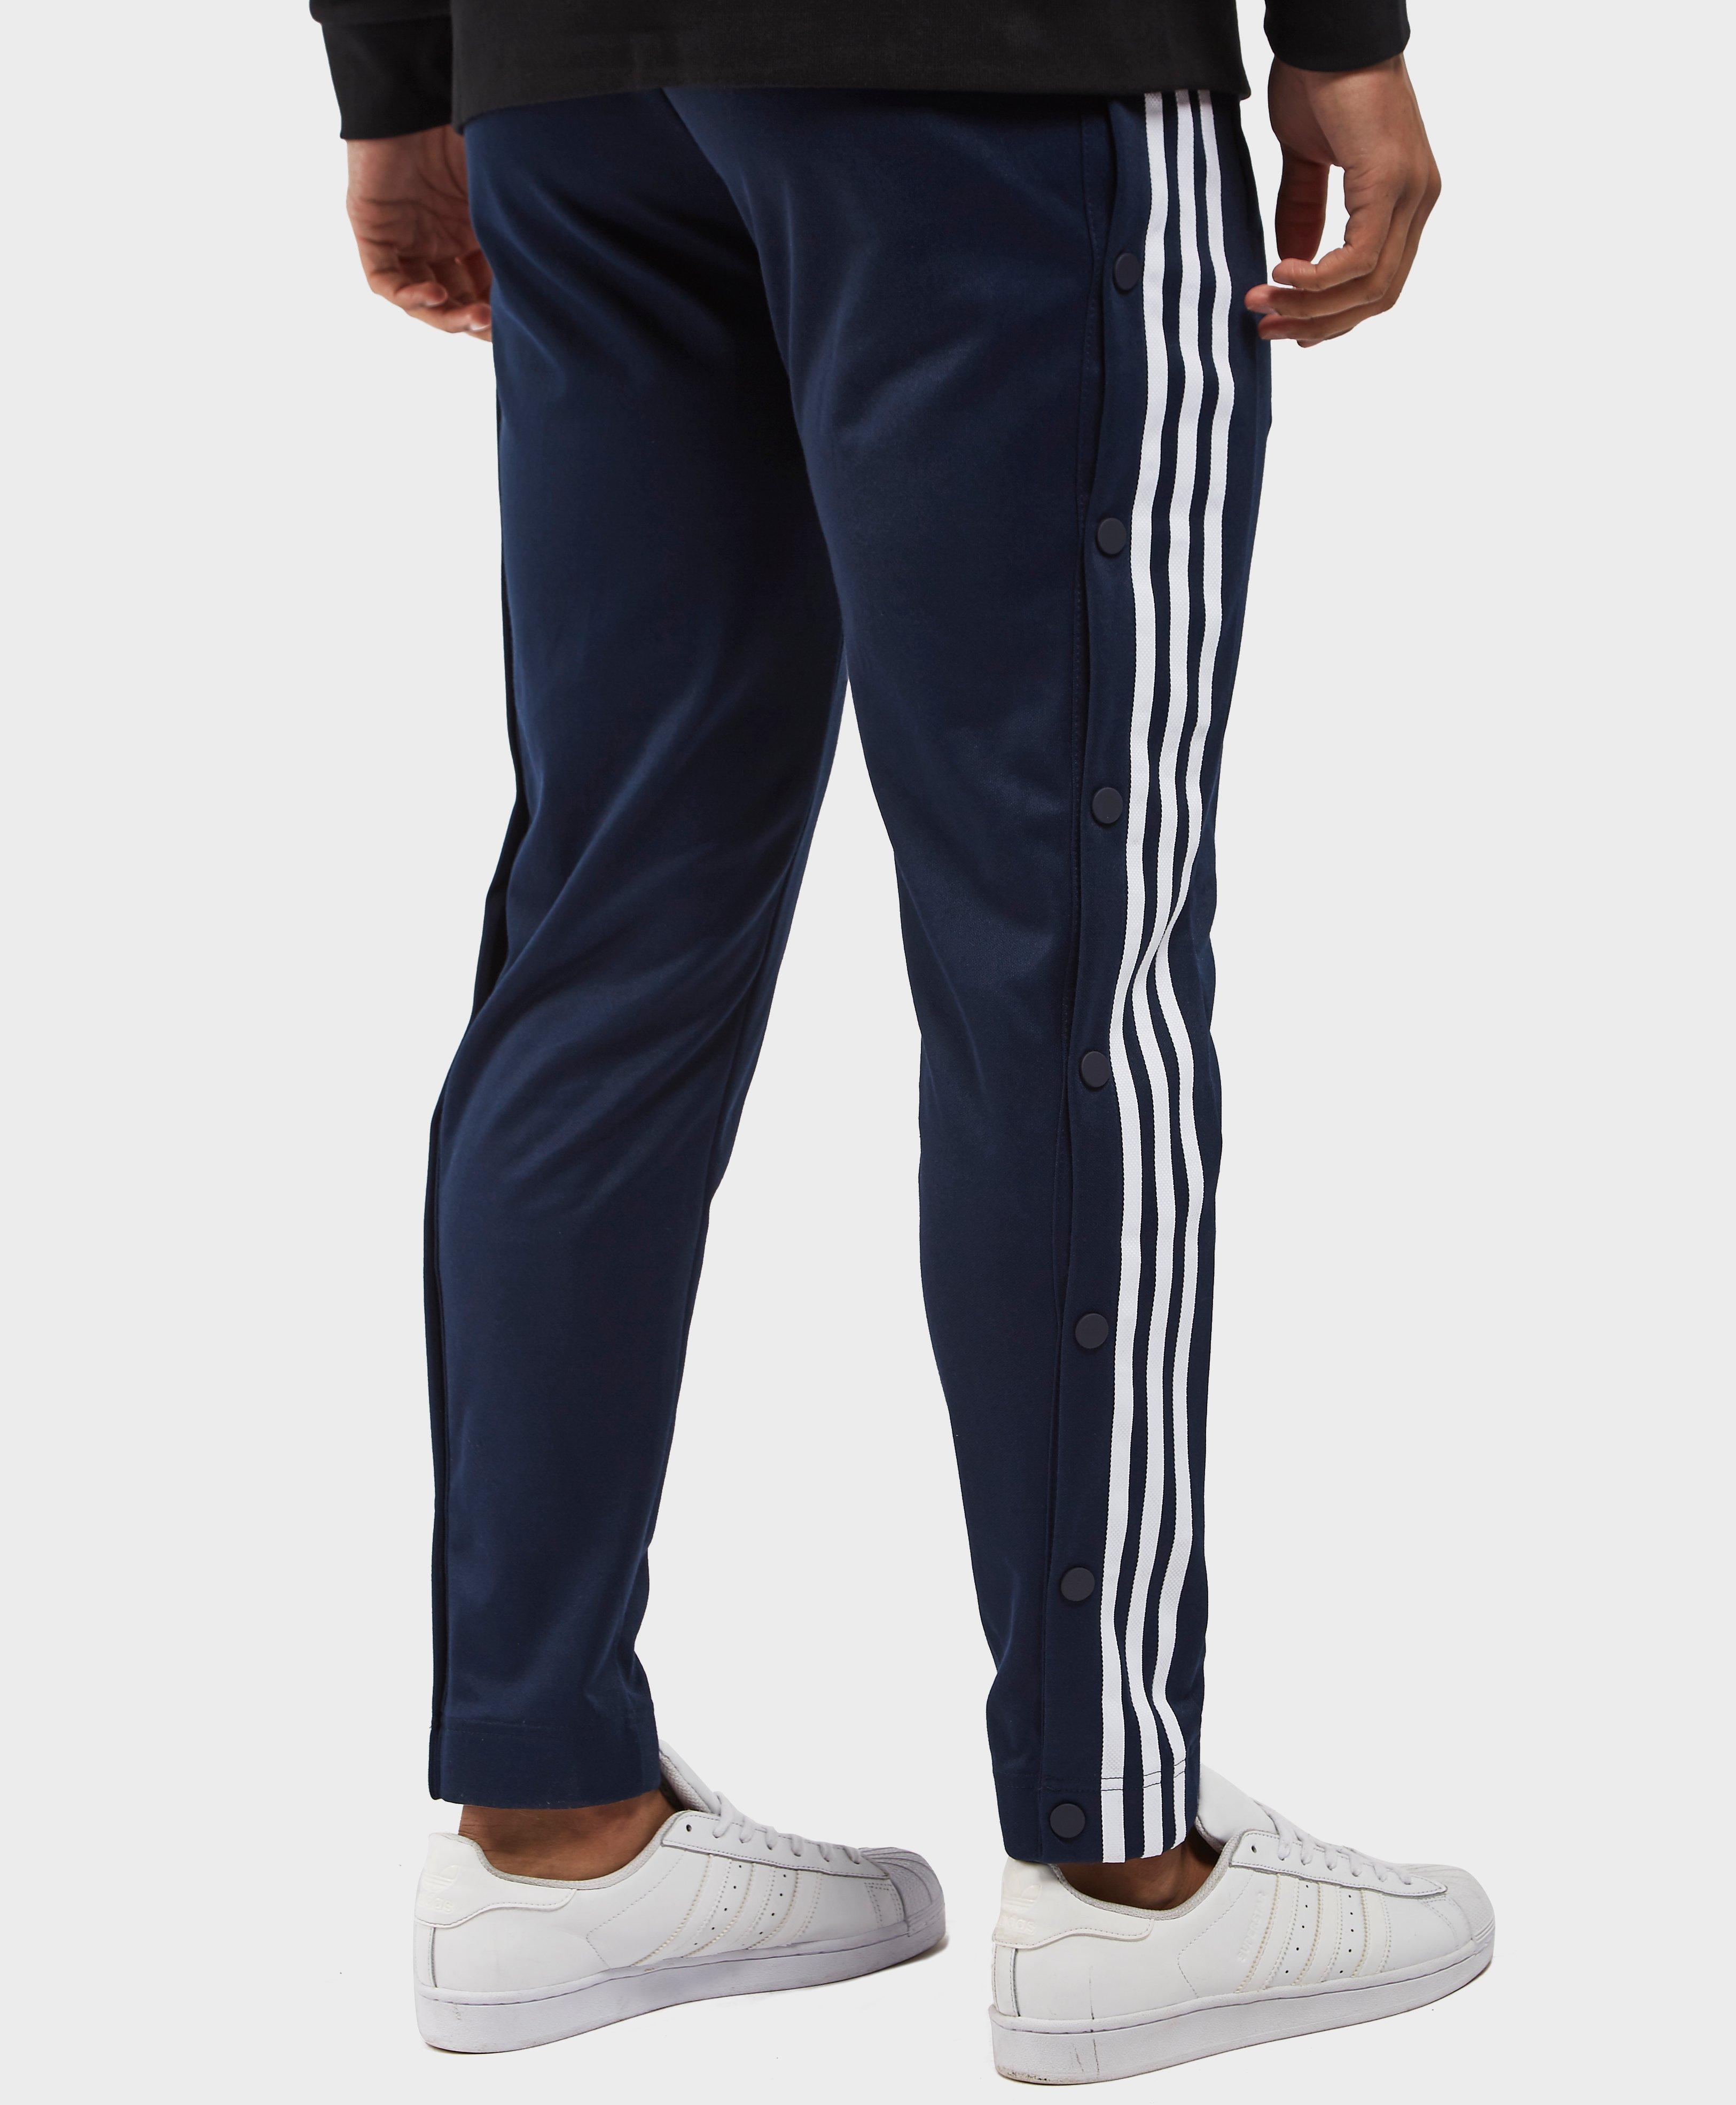 Lyst - Adidas Originals Adibreak Snap Track Pants in Blue for Men